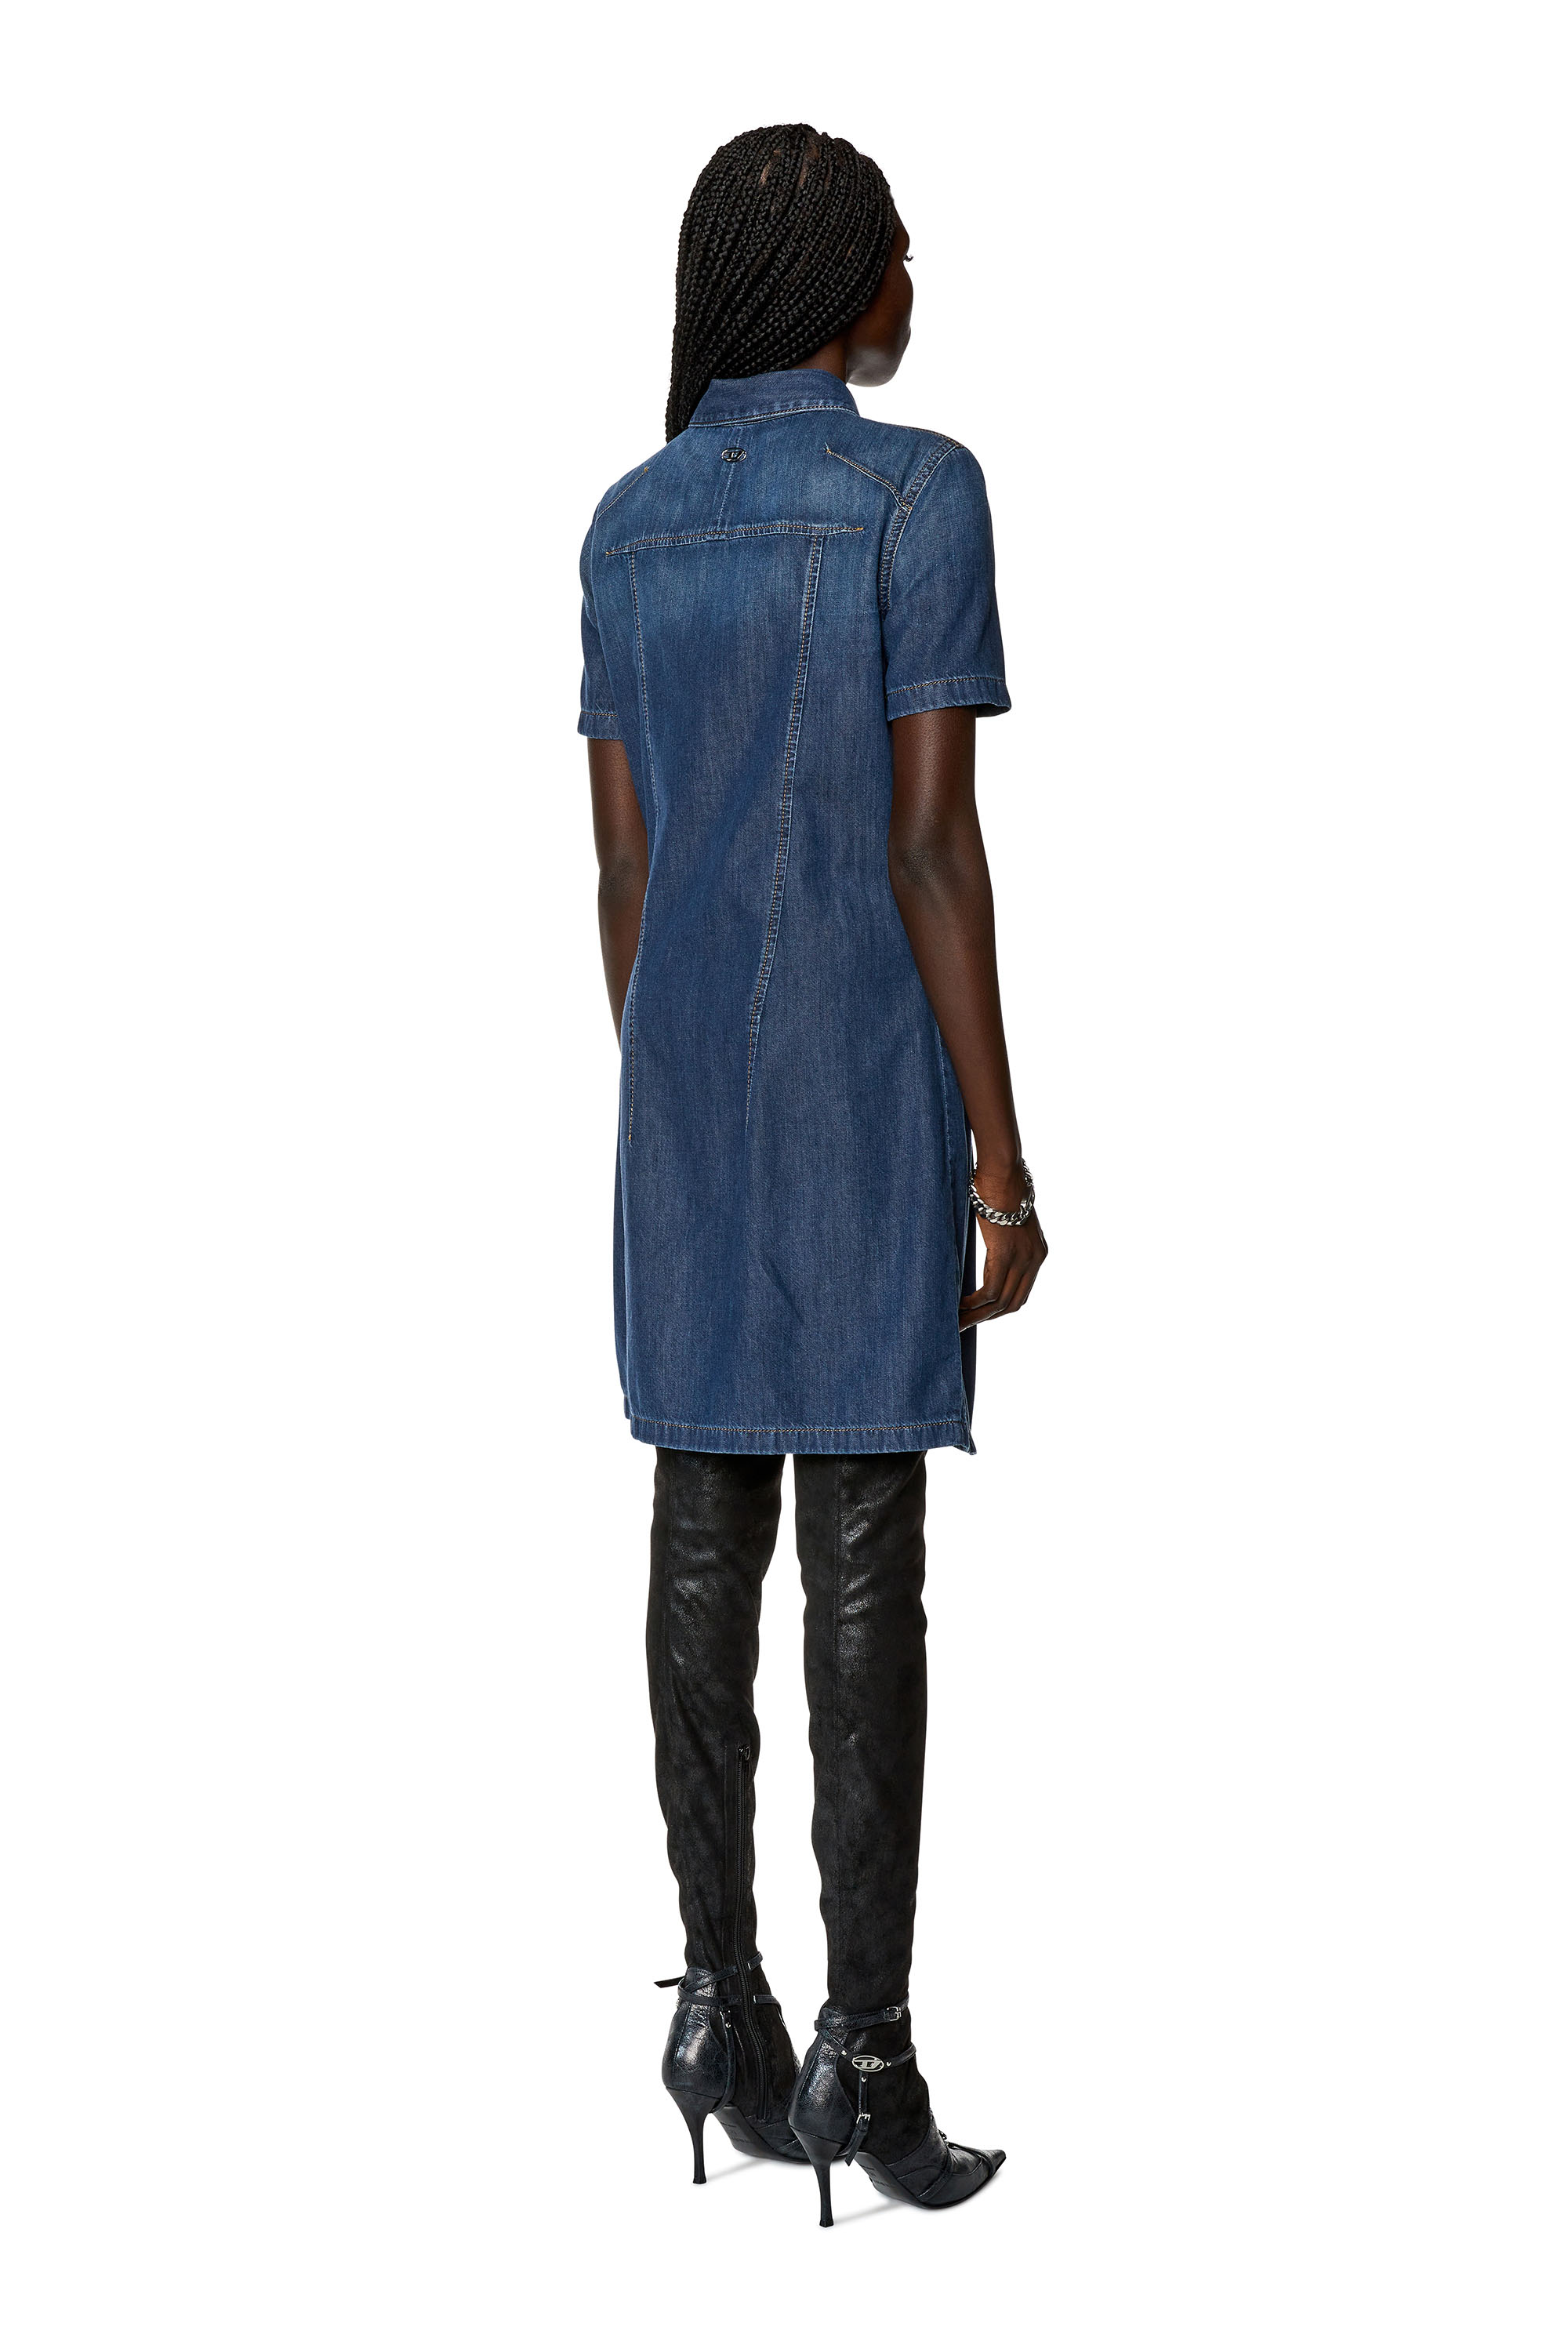 Diesel - DE-SHIRTY, Woman Buttoned shirt dress in stretch denim in Blue - Image 2